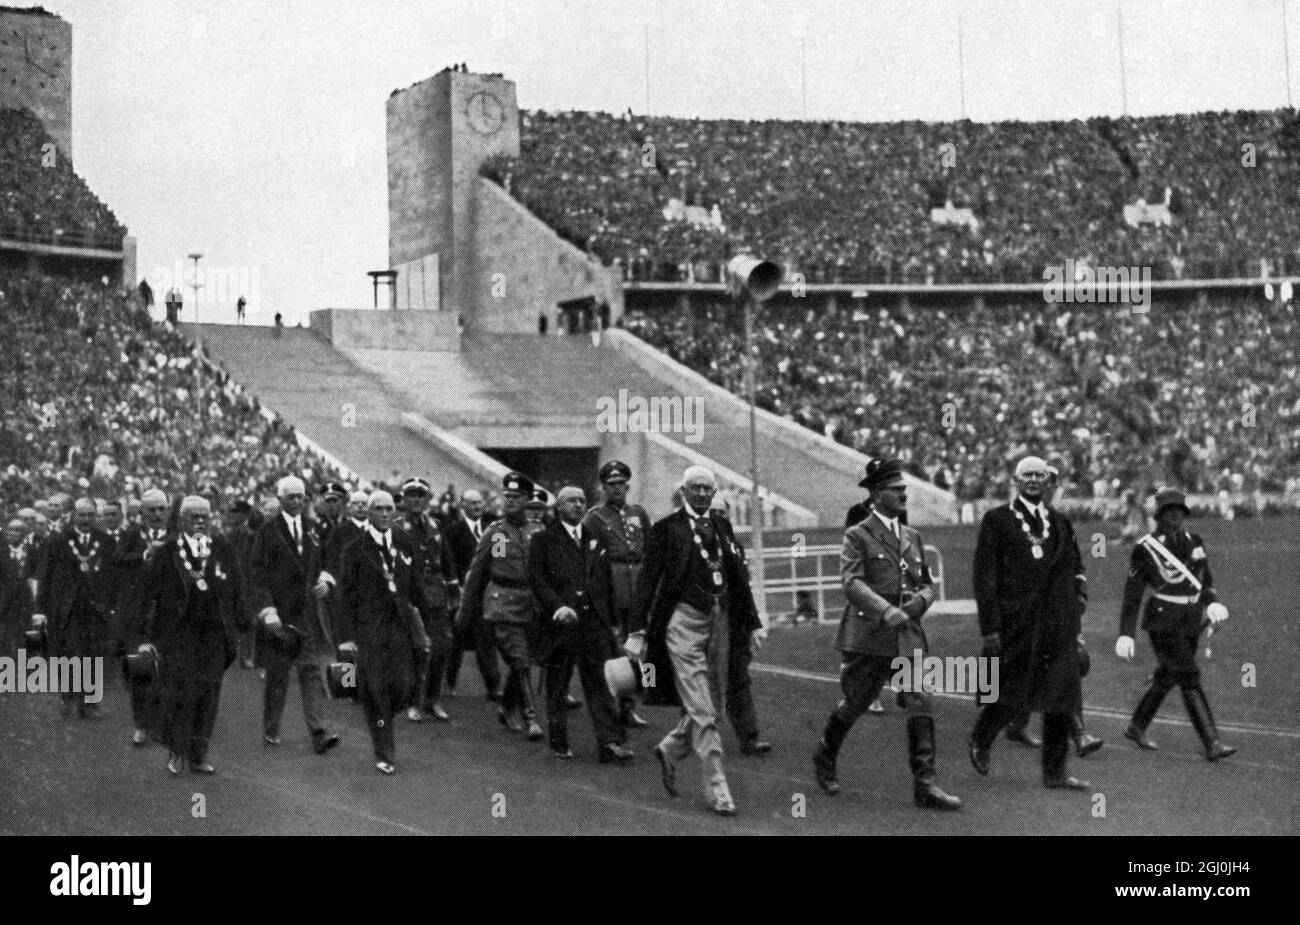 1936 Jeux Olympiques, Berlin - Adolf Hitler, le leader et patron, avec une escorte au sport mondial dans le stade. (Adolf Hitler, der Fuhrer und Schirmherr, mit den Fuhrem des Weltsportes im Stadion) ©TopFoto Banque D'Images